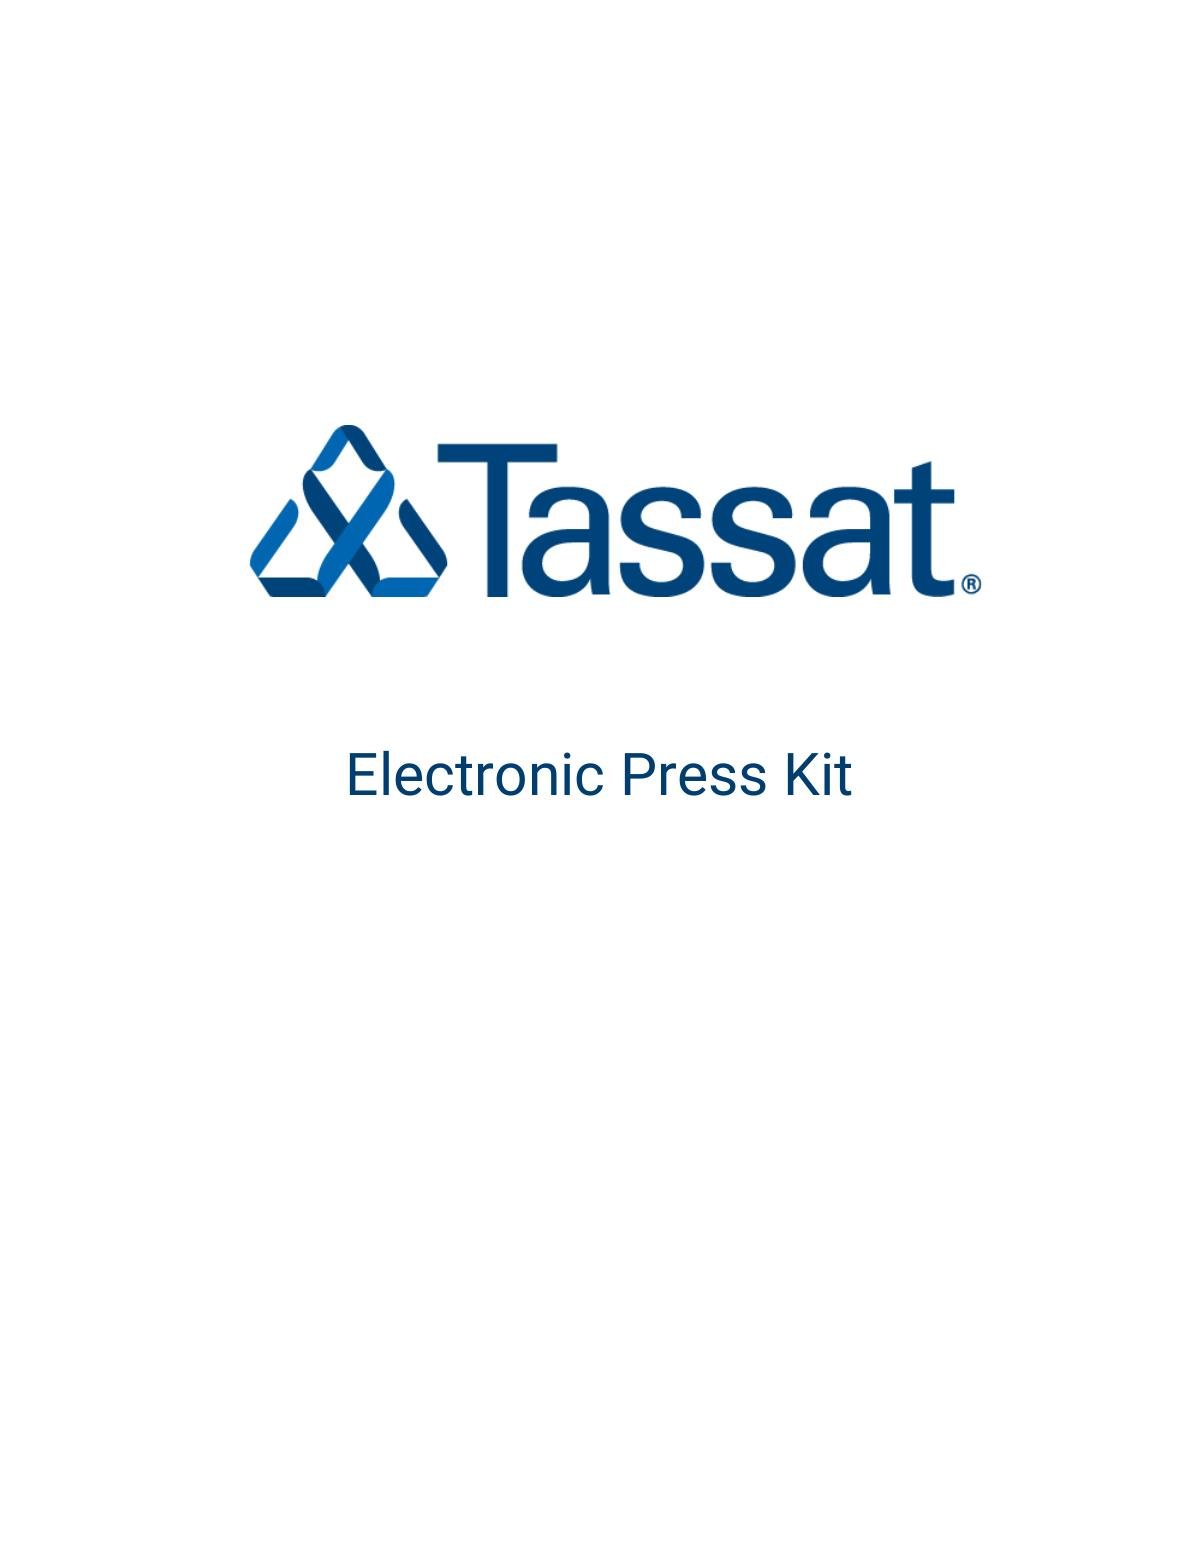 Tassat Press Kit